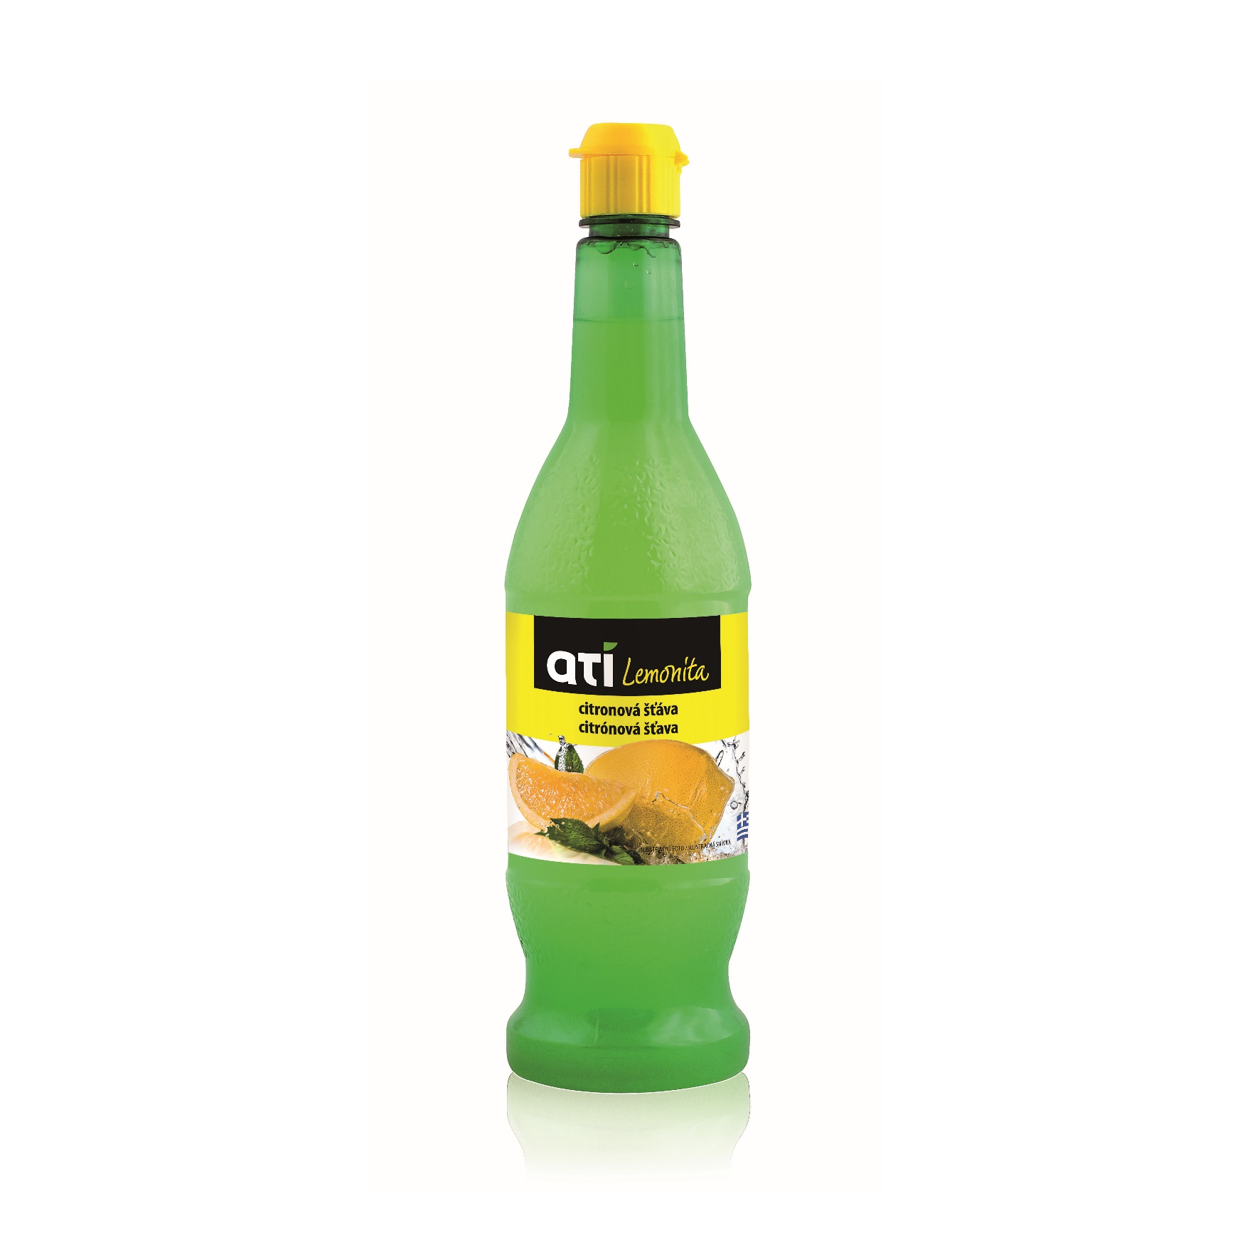 ATI Lemonita lemon juice